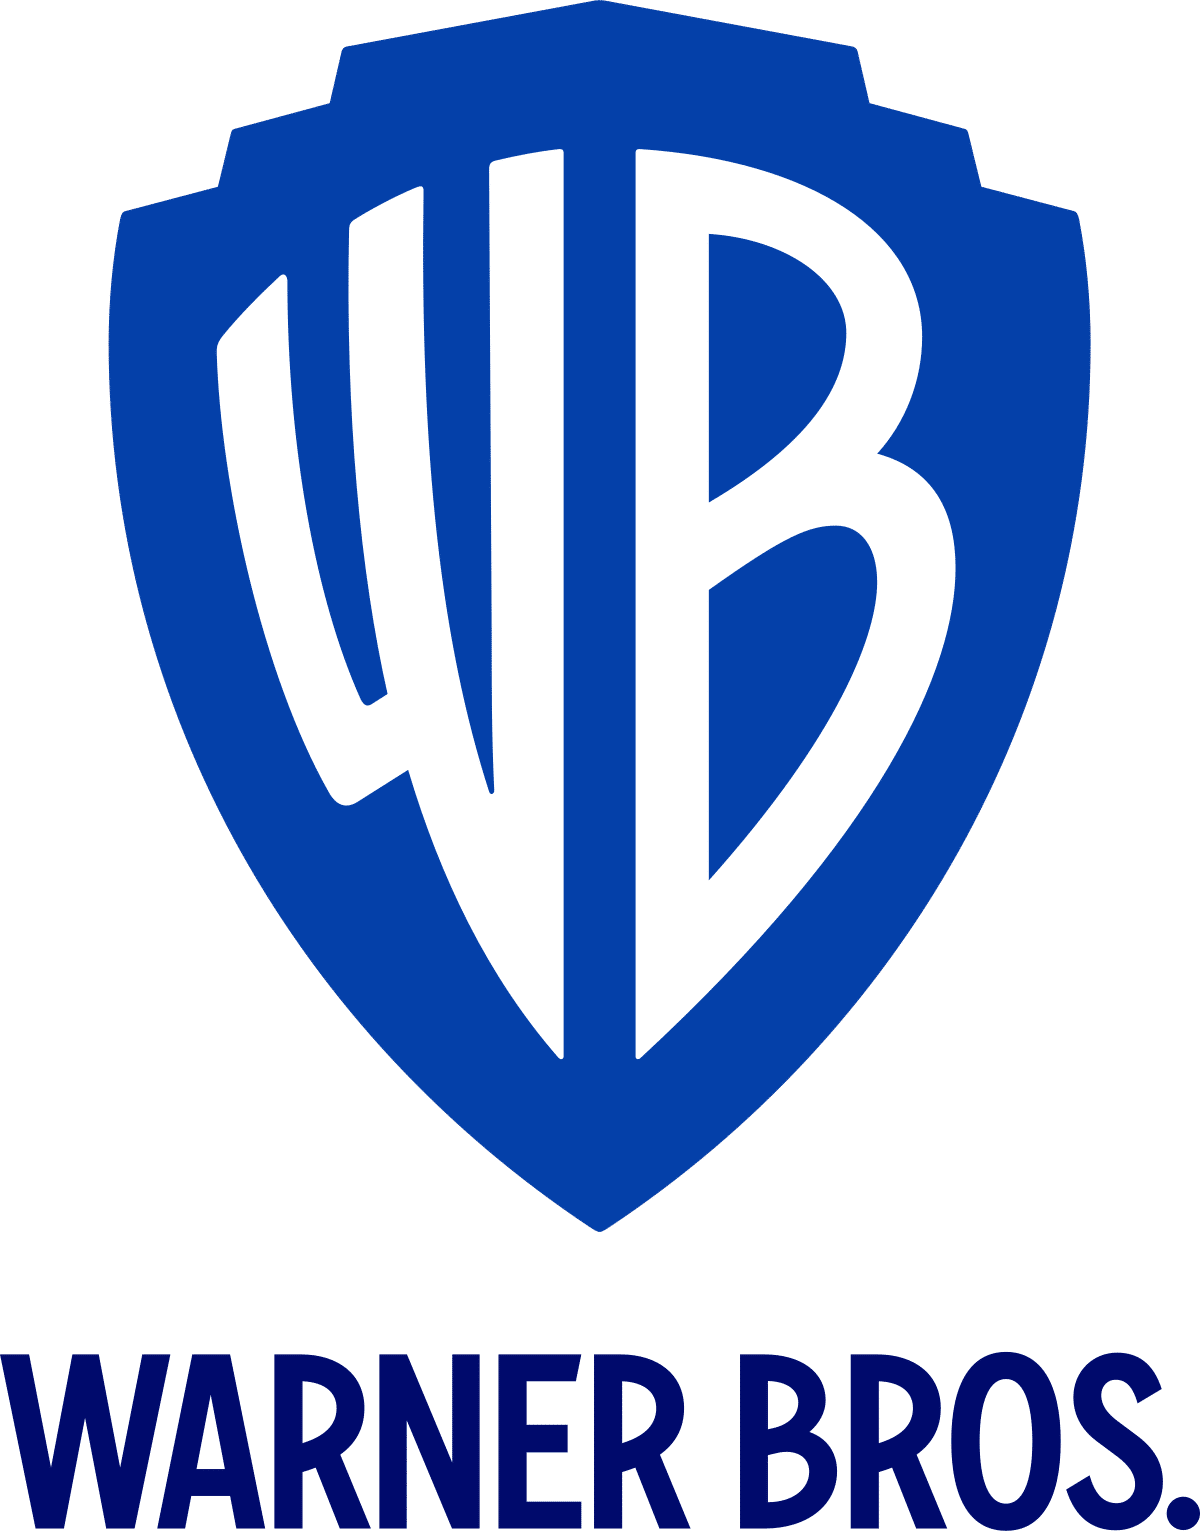 Warner Bros Entertainment Inc